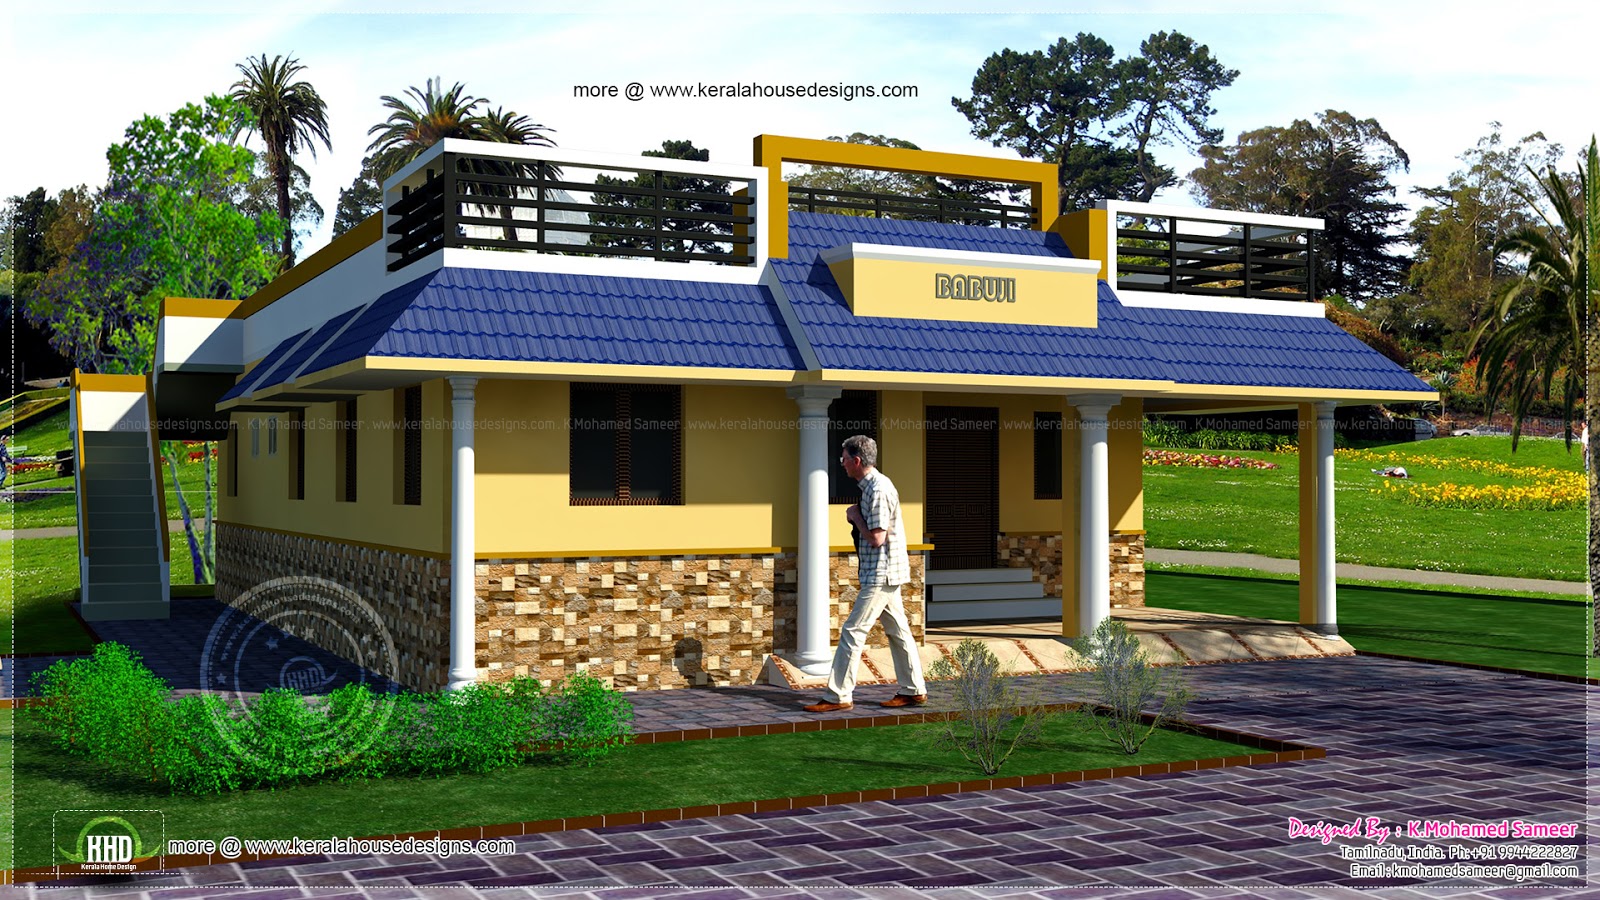  3  bedroom  single floor house  plan  Kerala home  design and 